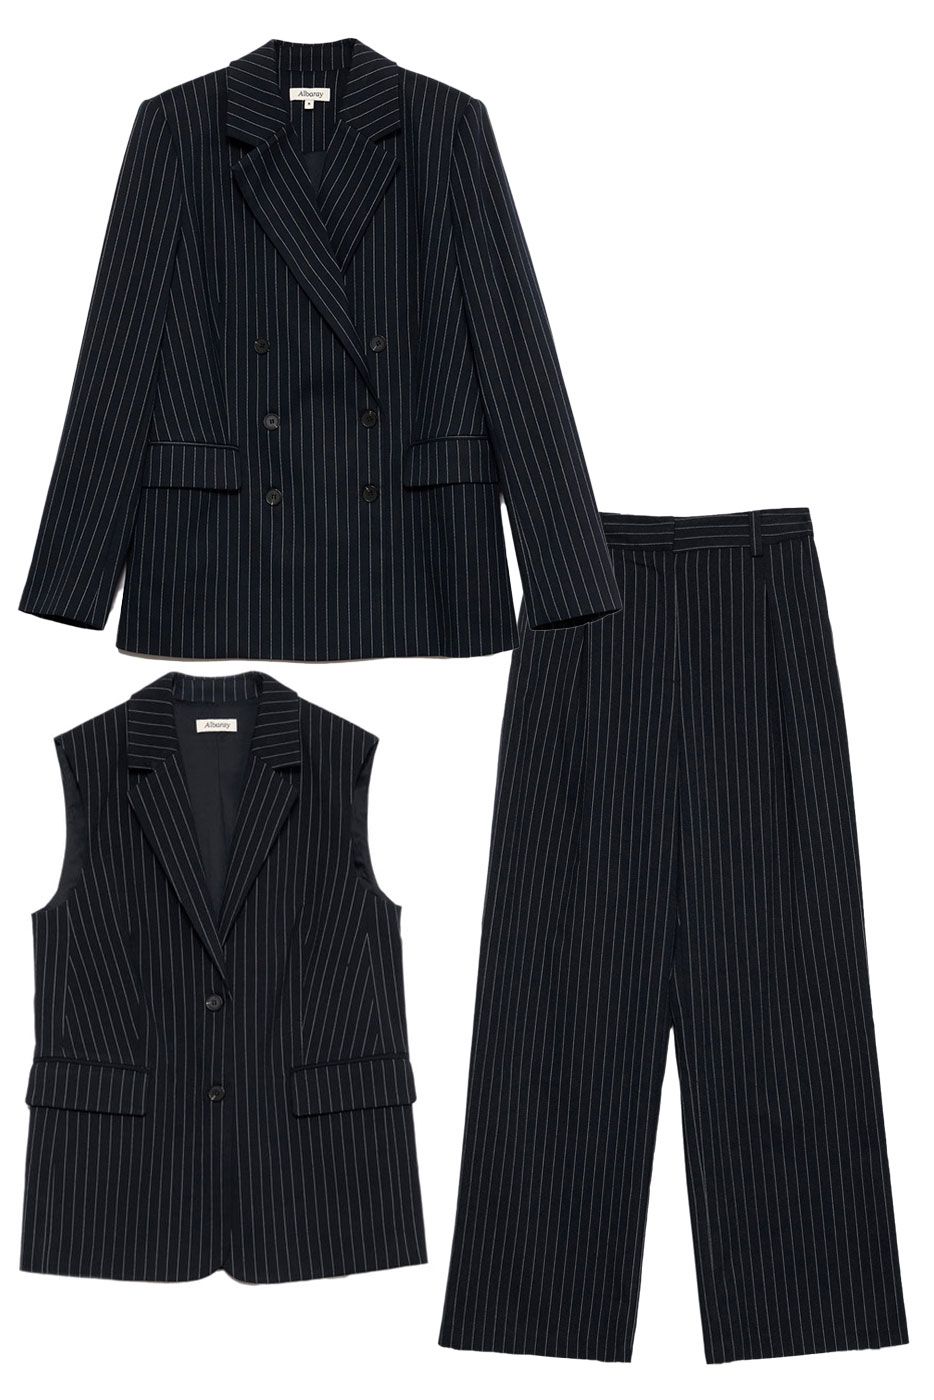 Ladies trouser suit | Stuff for Sale - Gumtree